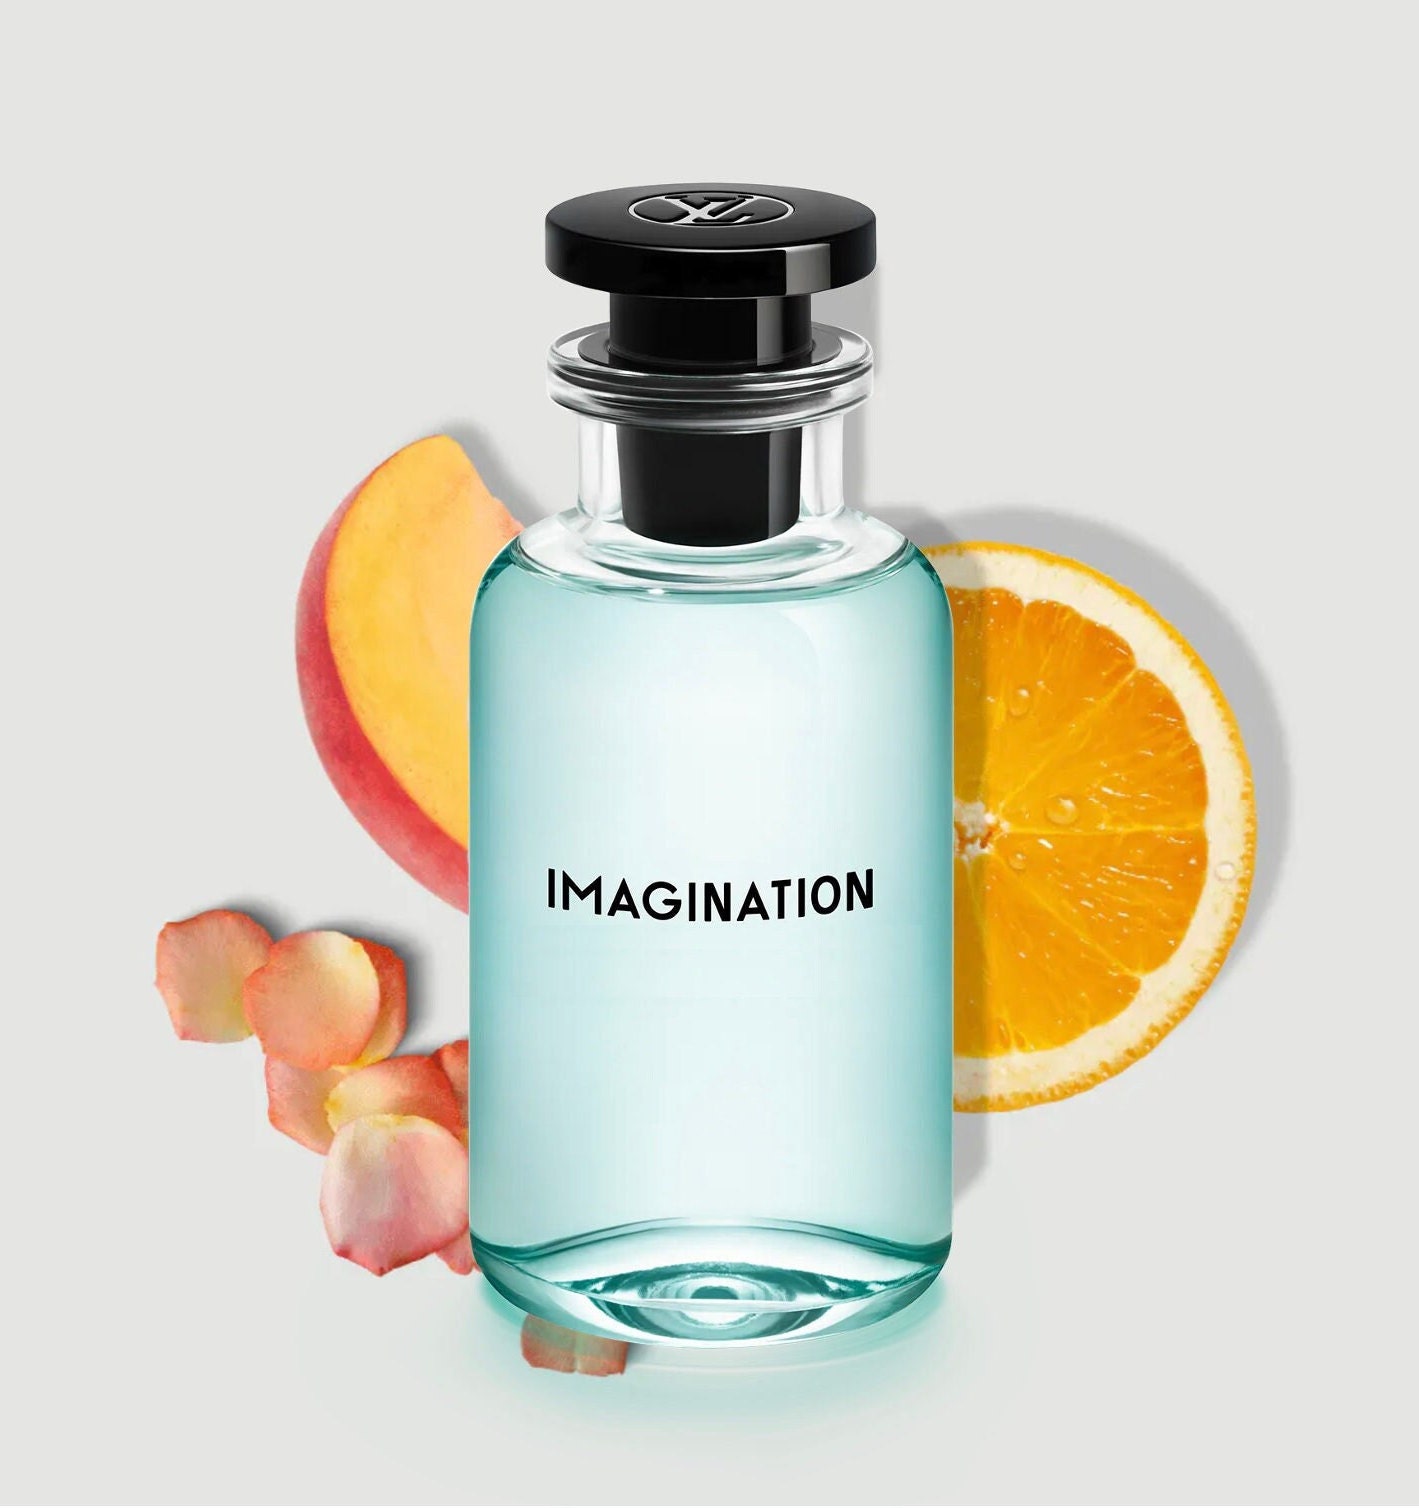 Let your imagination run wild with Louis Vuitton fragrance - Men's